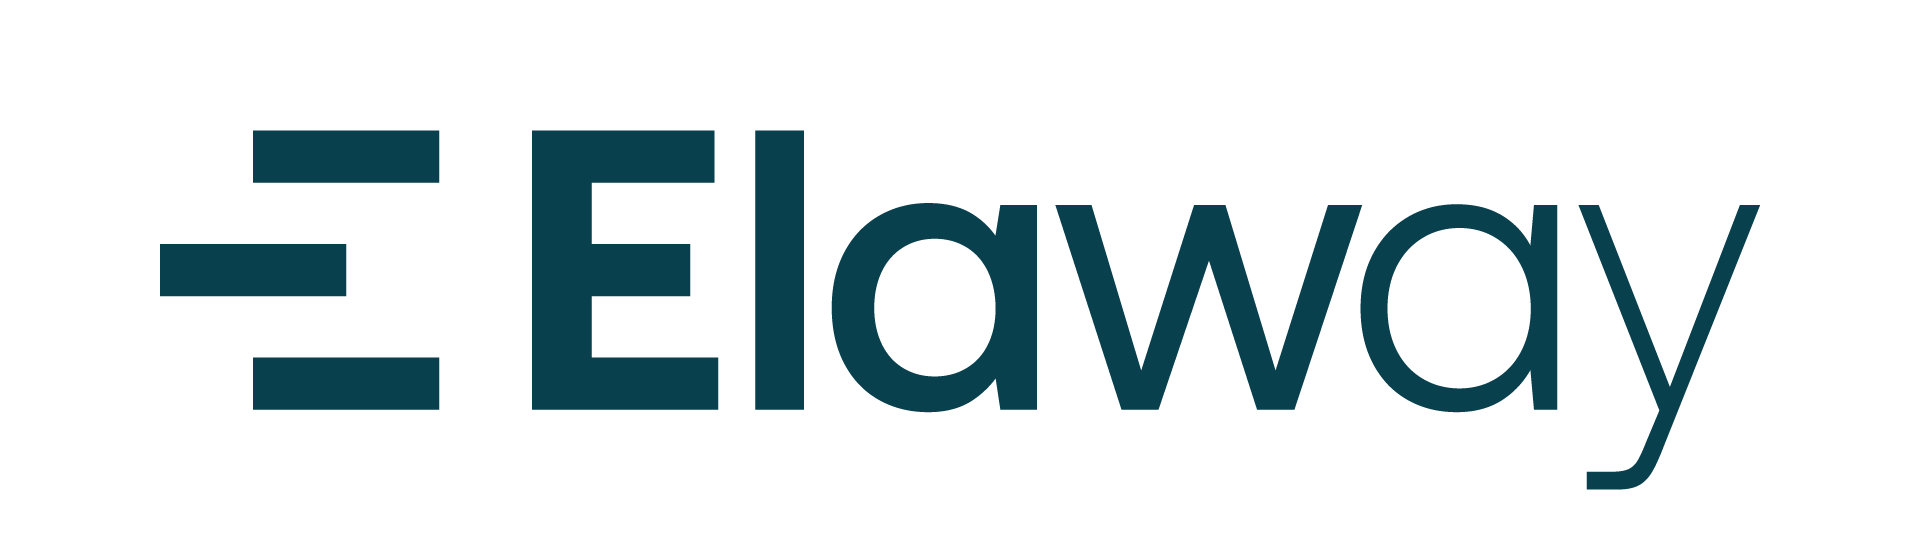 Elaway logo 2